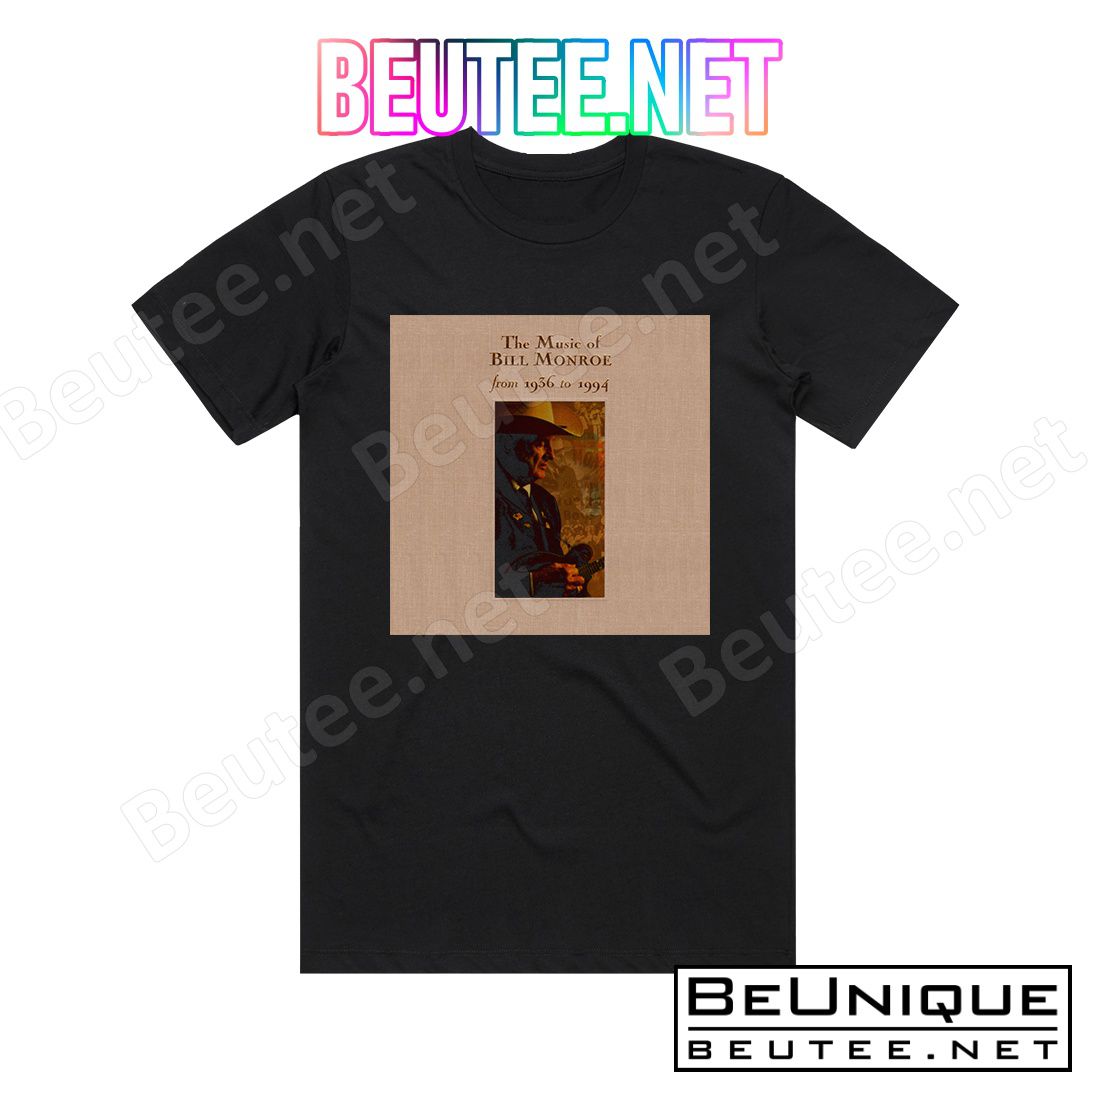 Bill Monroe The Music Of Bill Monroe 1936 To 1994 Album Cover T-Shirt